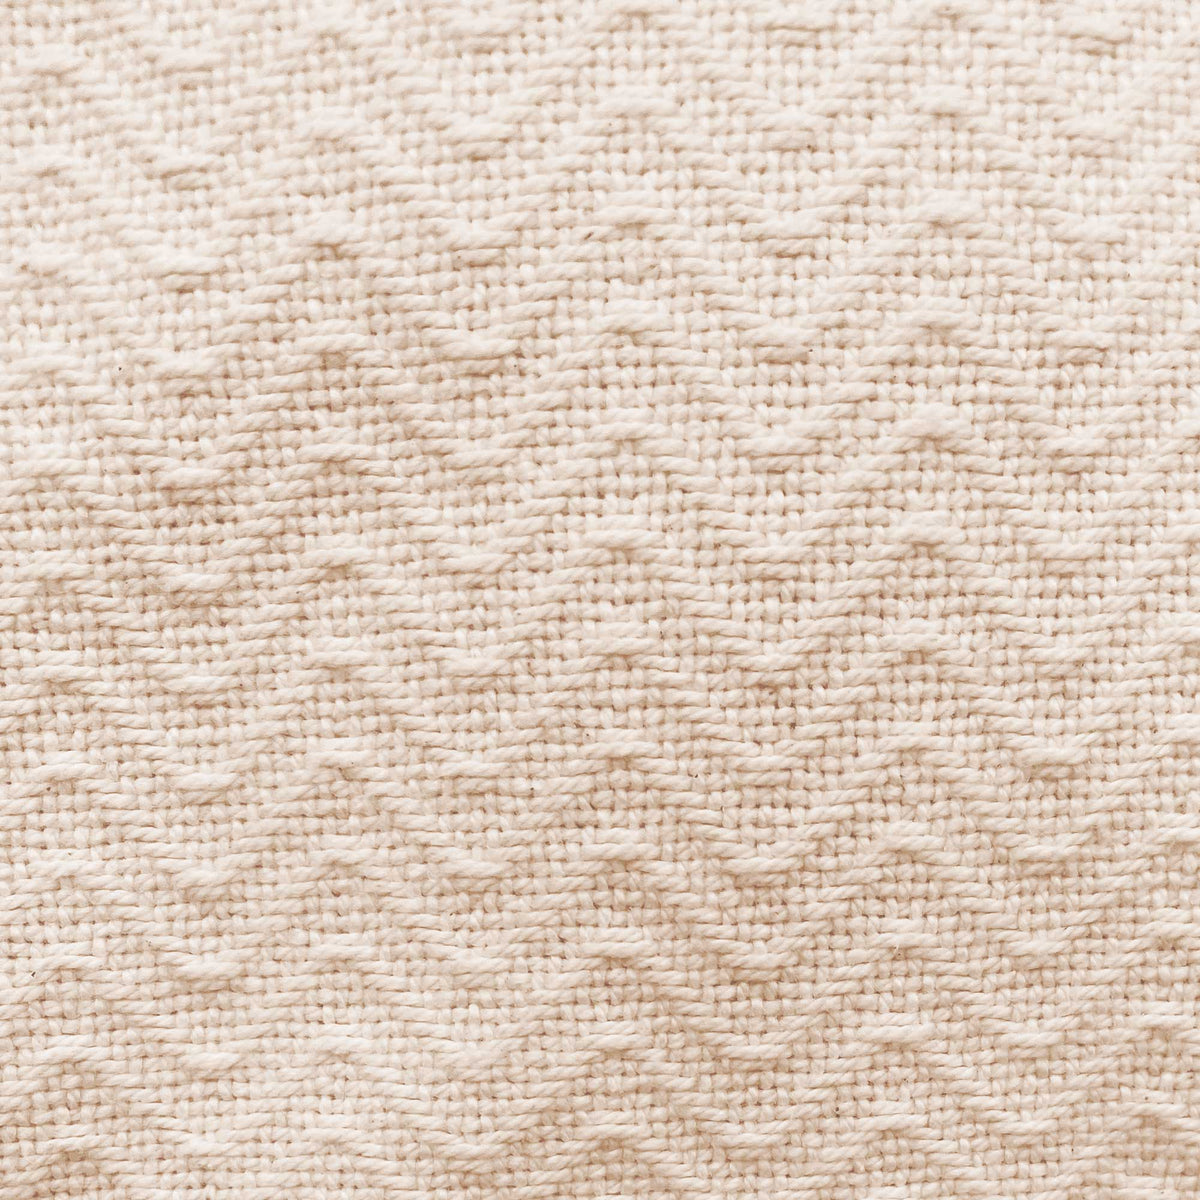 Cotton Blankets - Chevron Weave - Natural - American Blanket Company